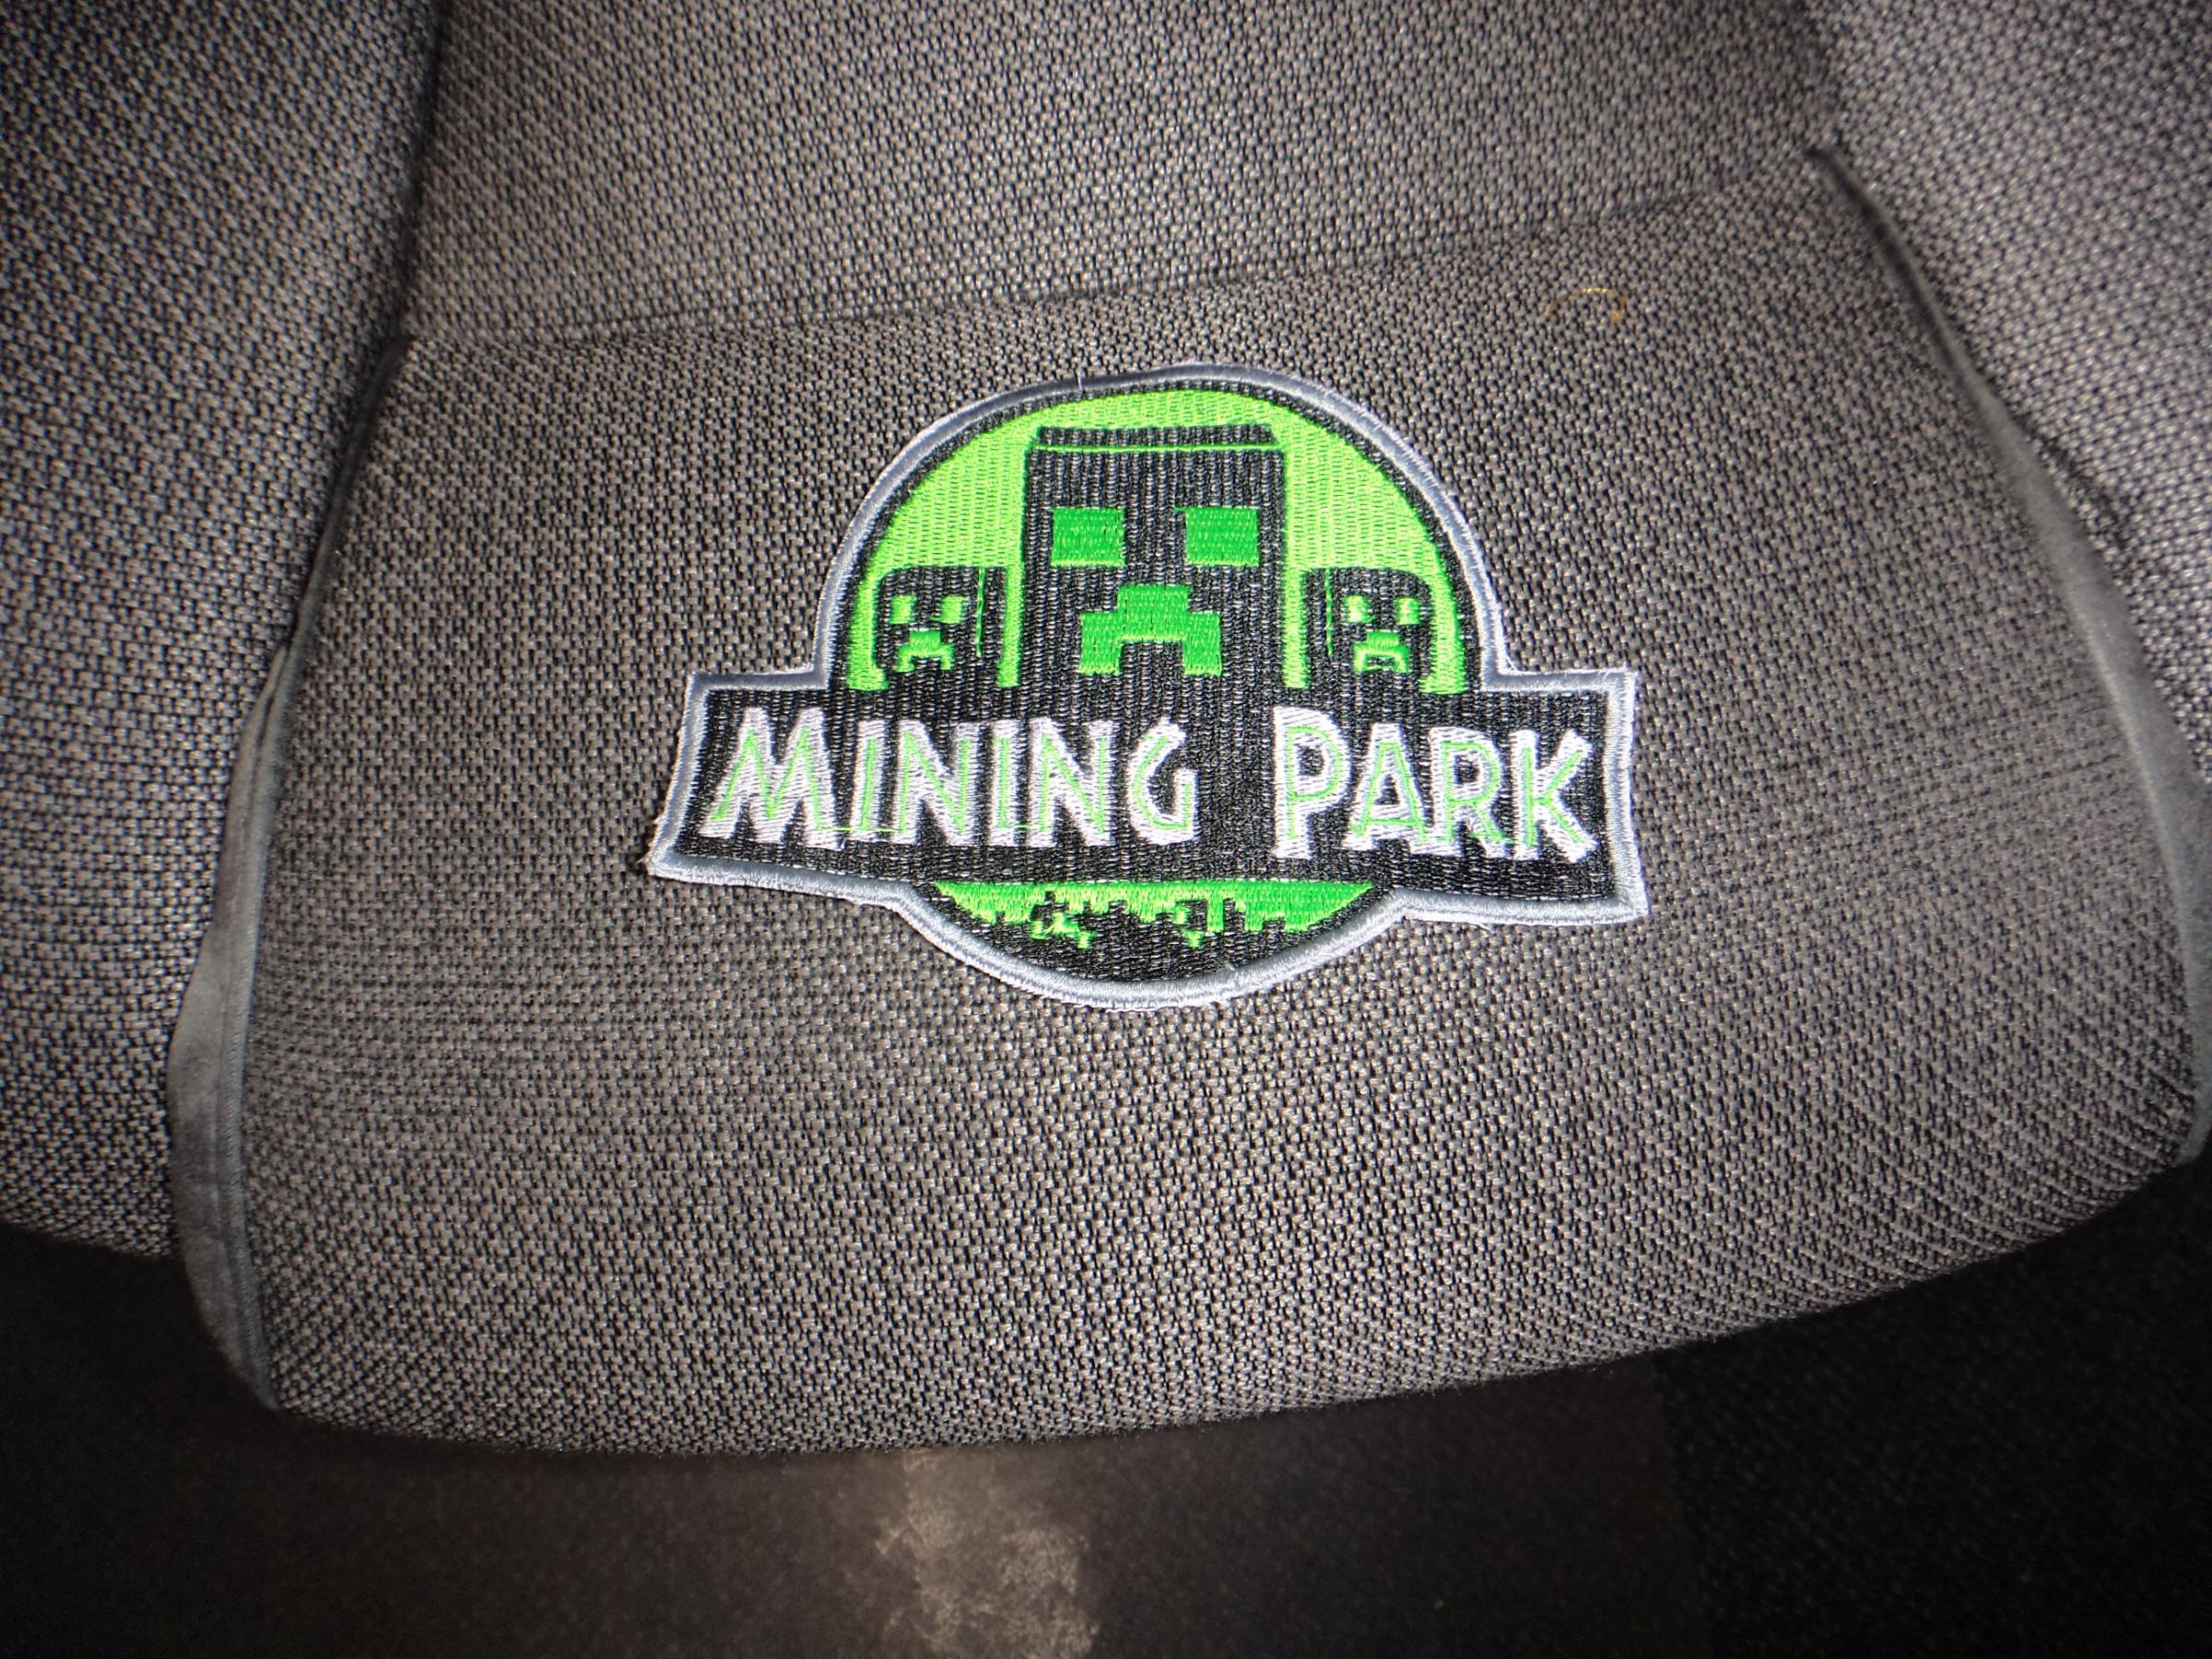 Mining park machine embroidery design